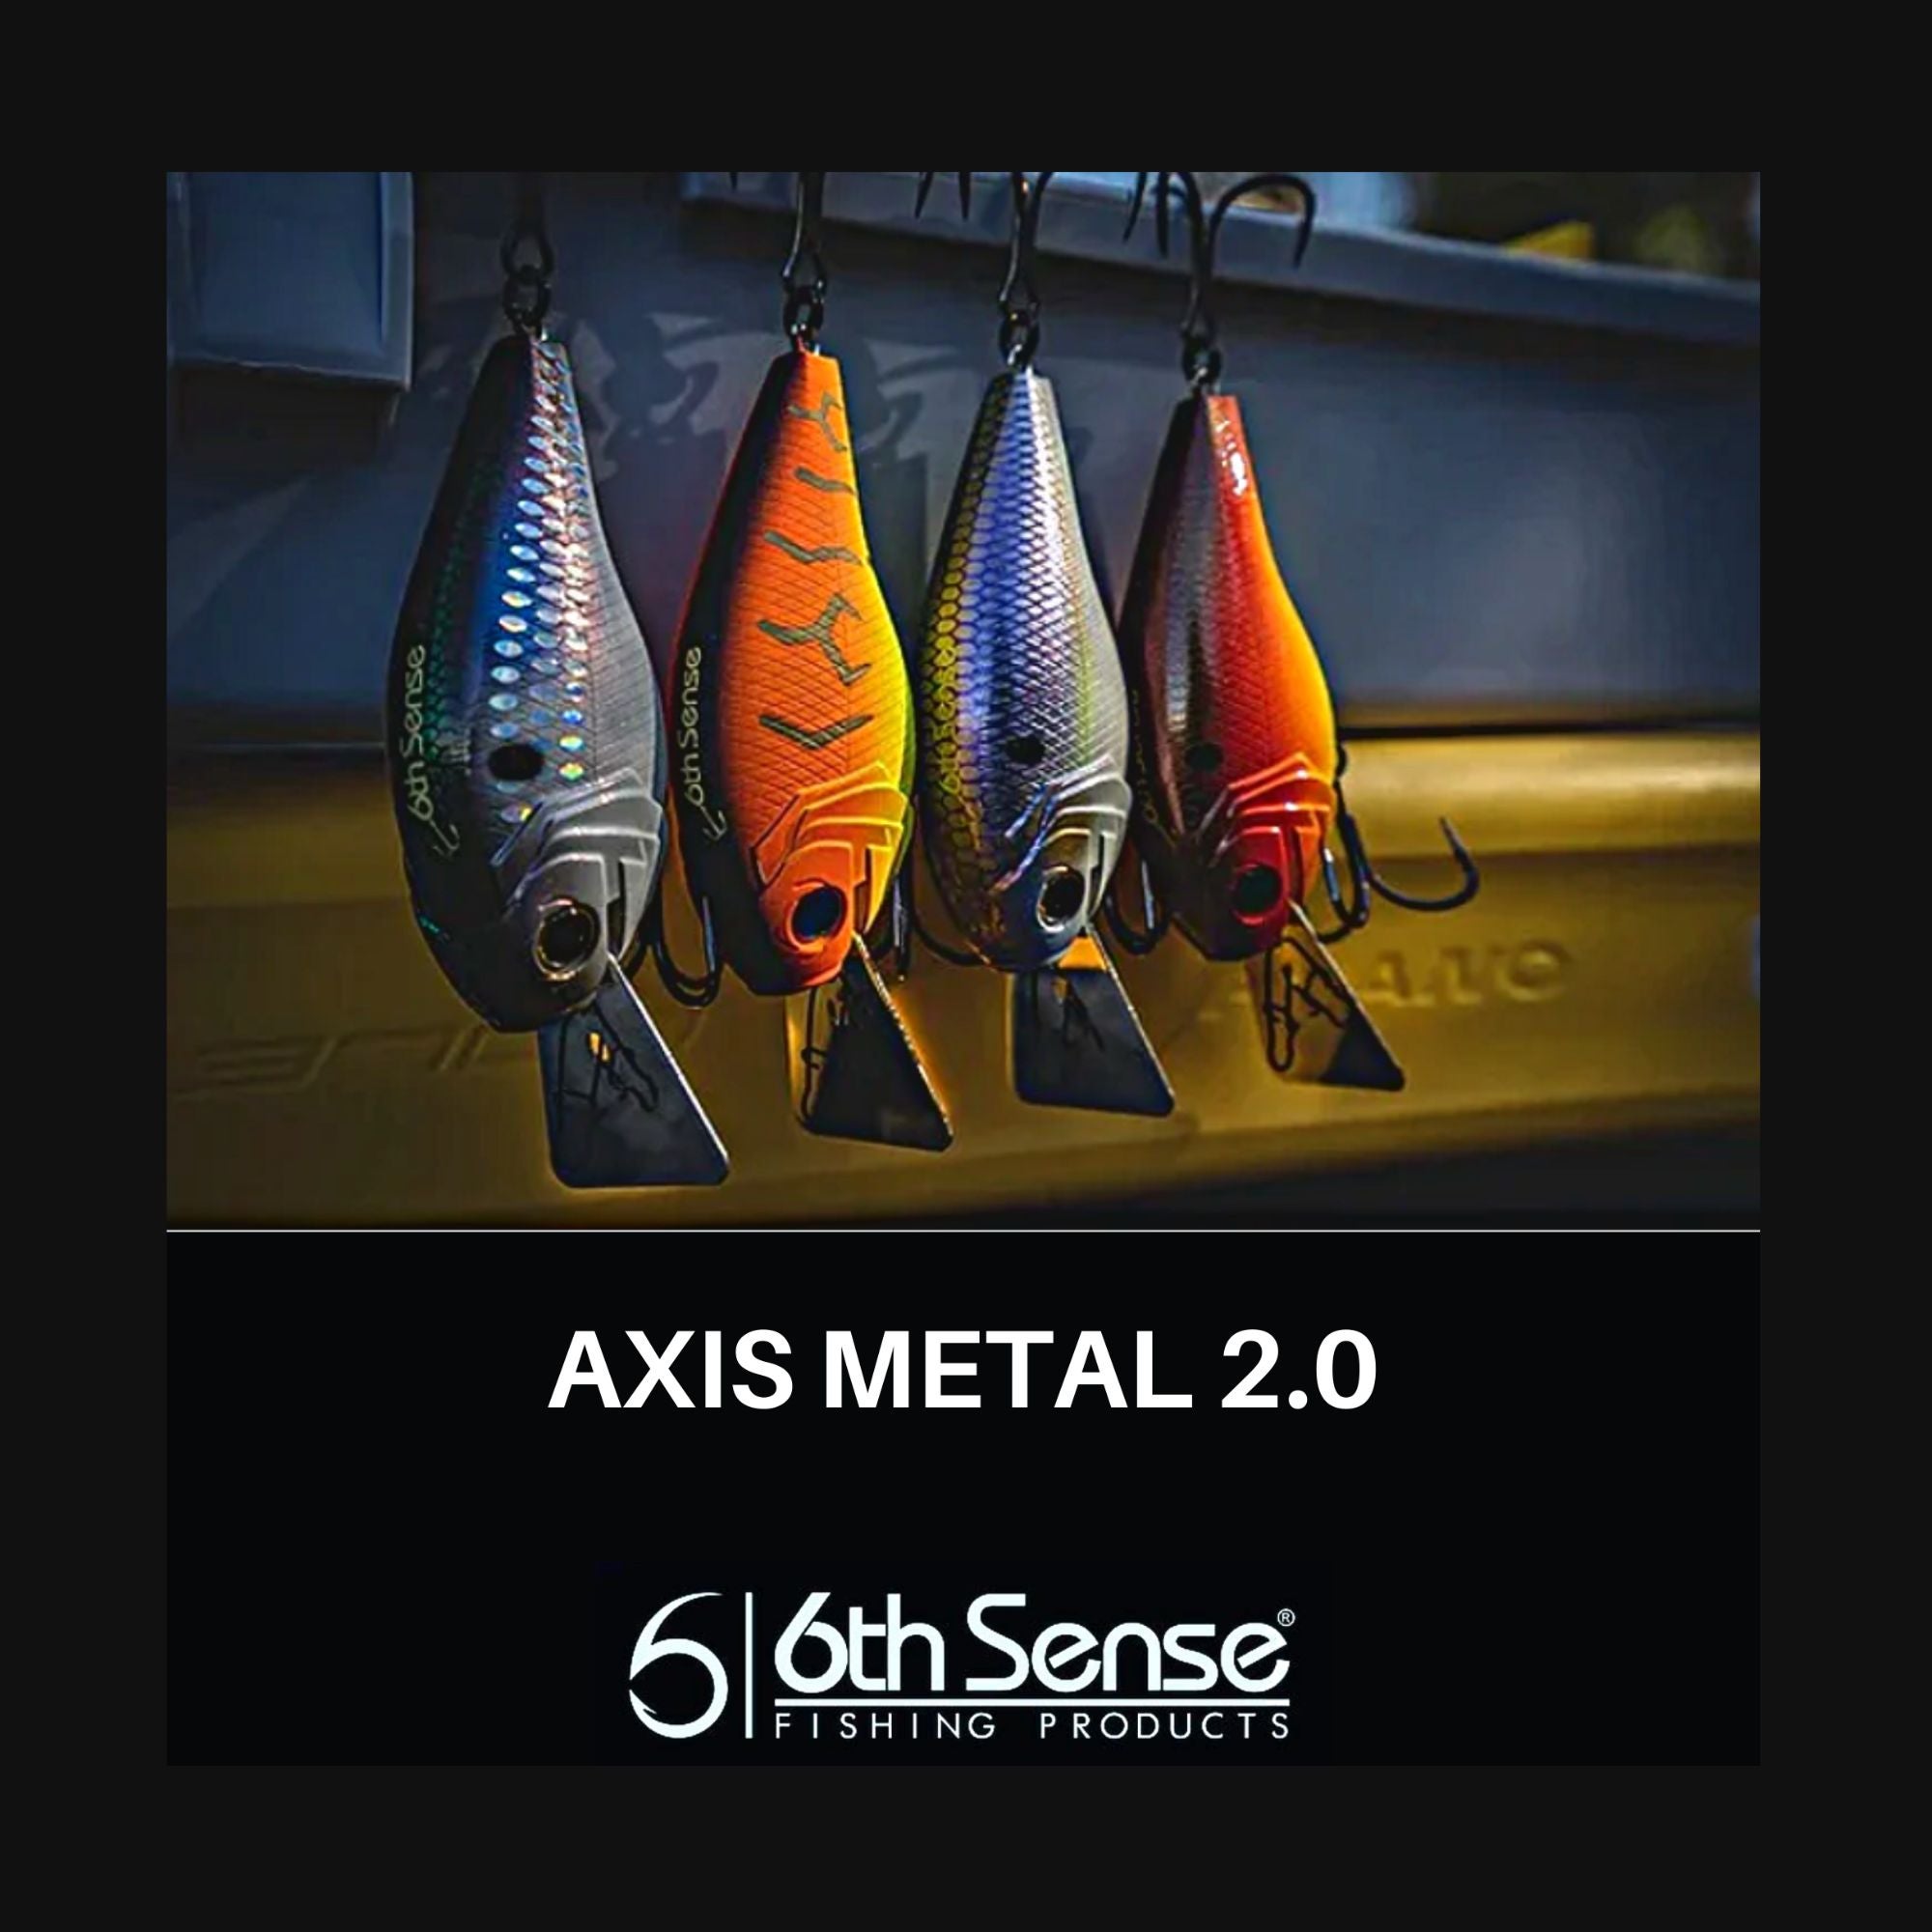 Axis Metal 2.0, 6th Sense Fishing, Crankbait, Lures